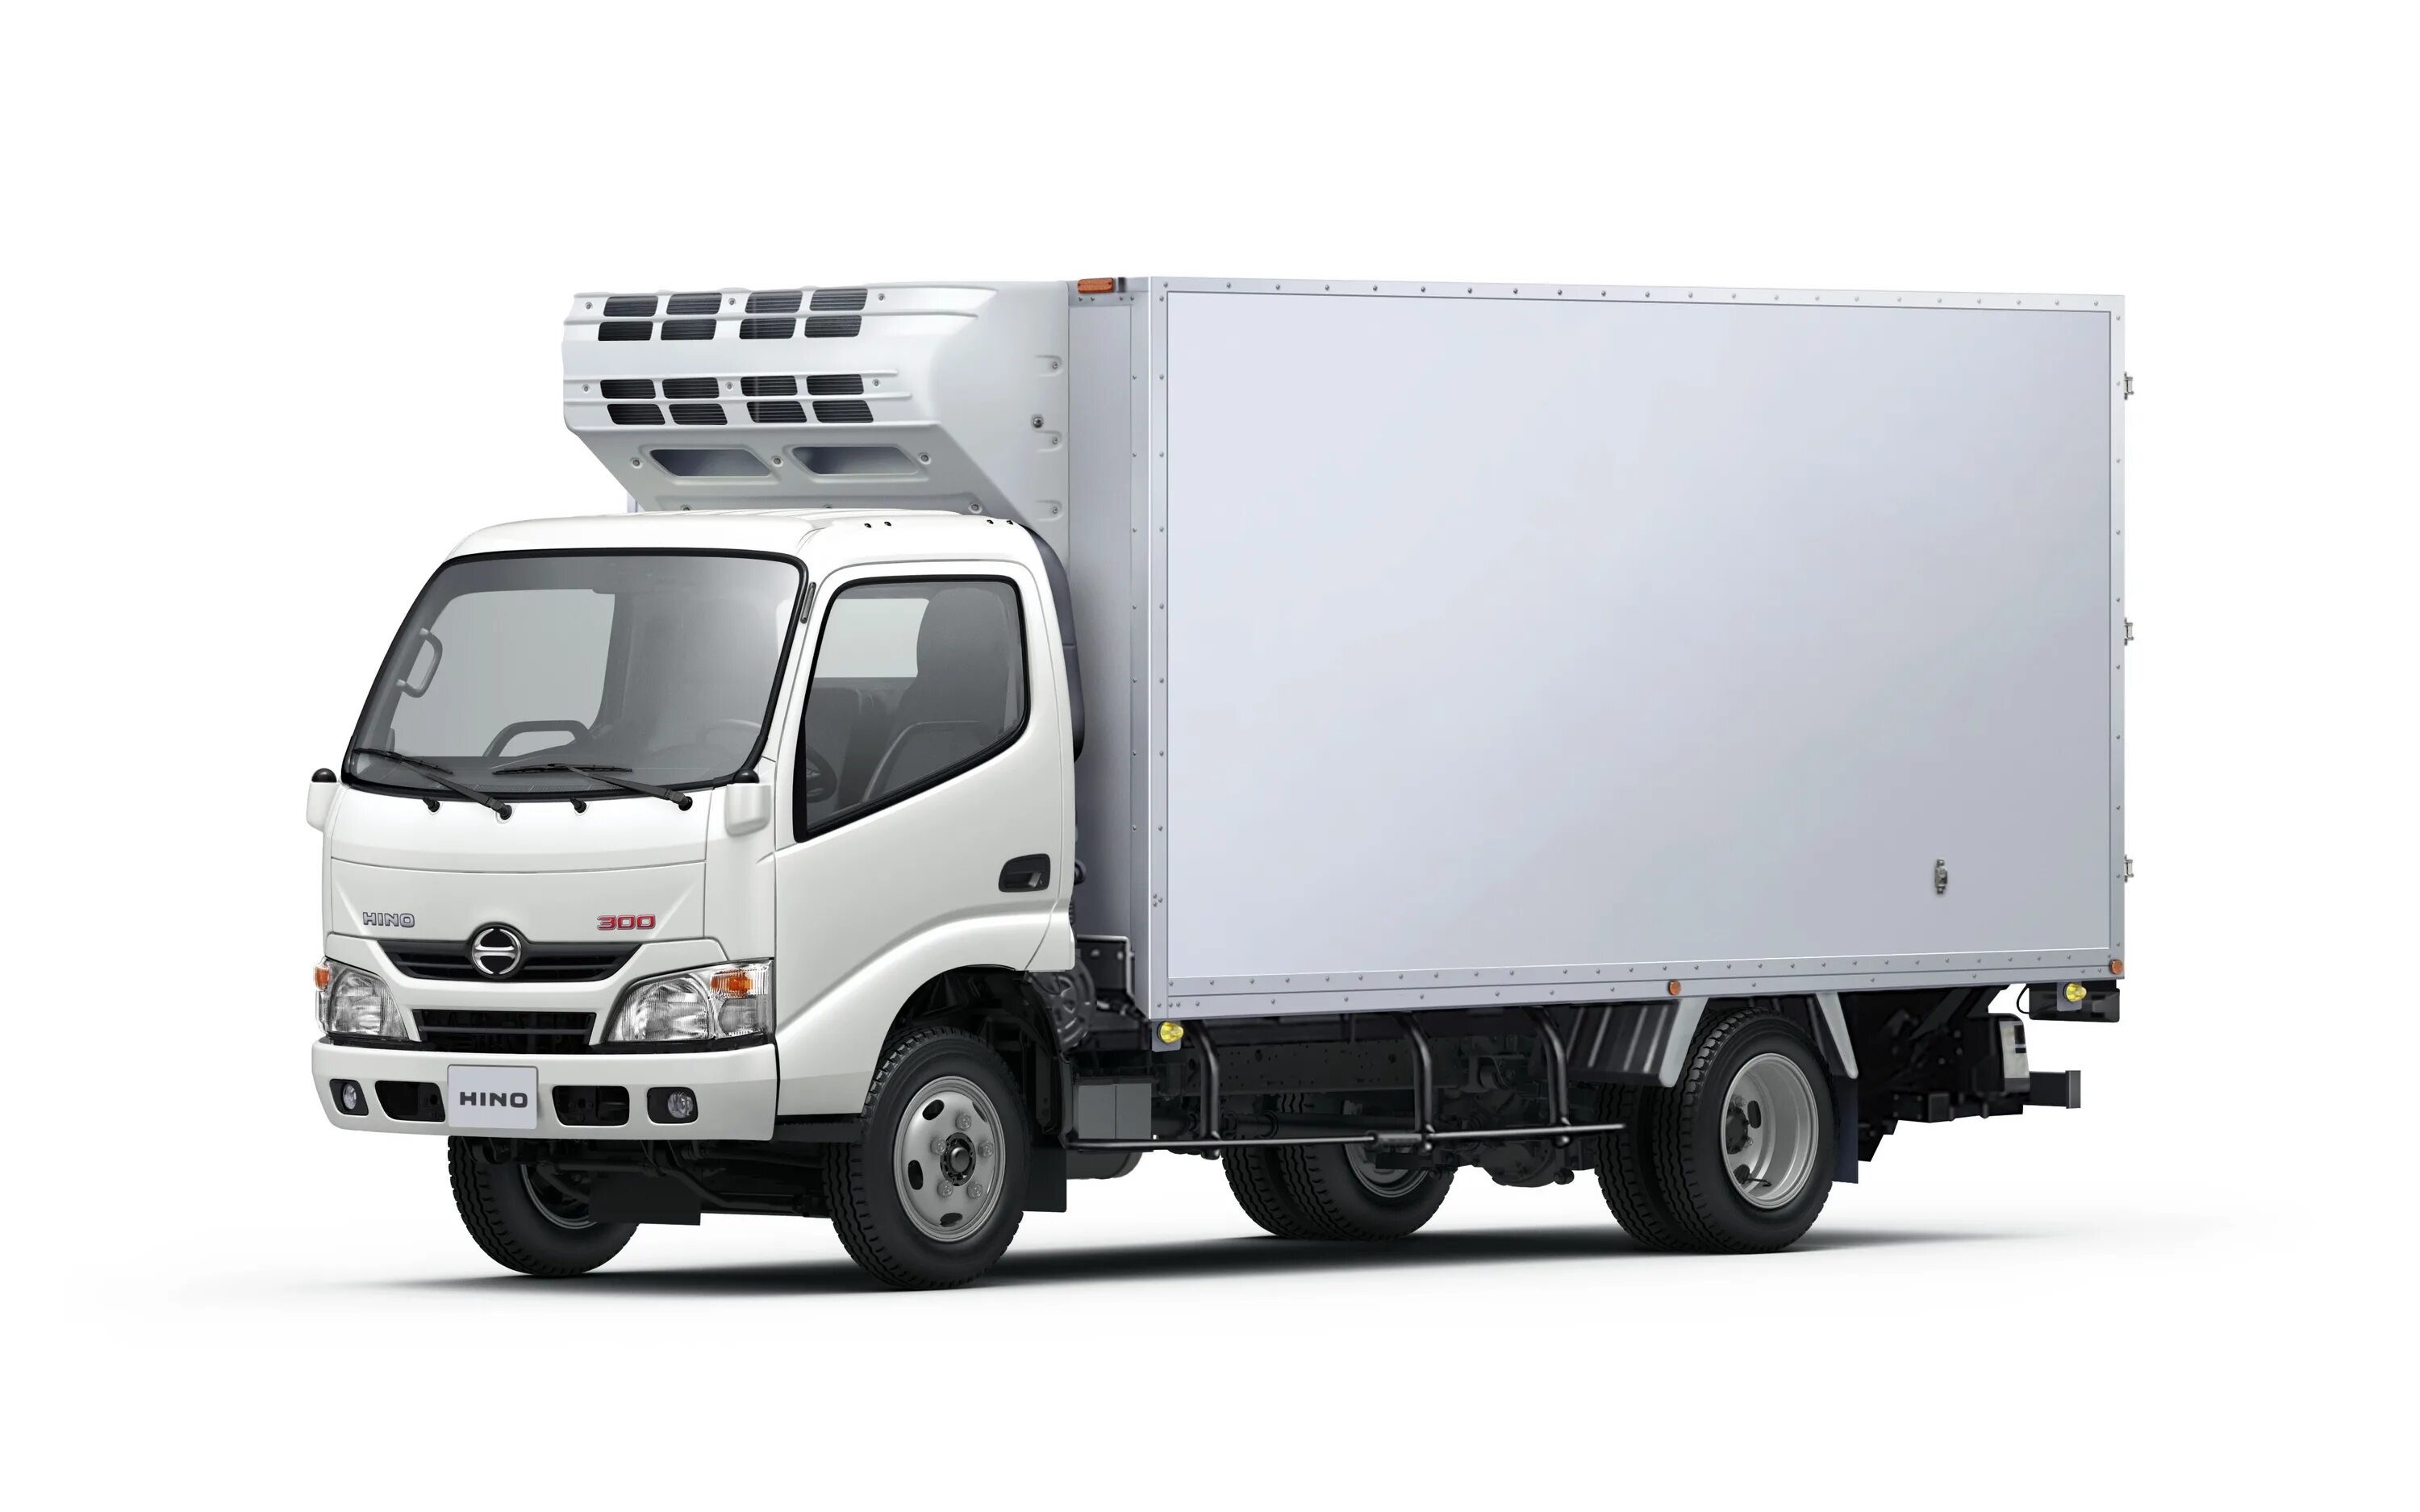 Купить грузовик категории в. Hino 300 3.5 т. Хино 300 3т. Хино 300 рефрижератор 5т. Изотермический фургон на шасси Hino 300.